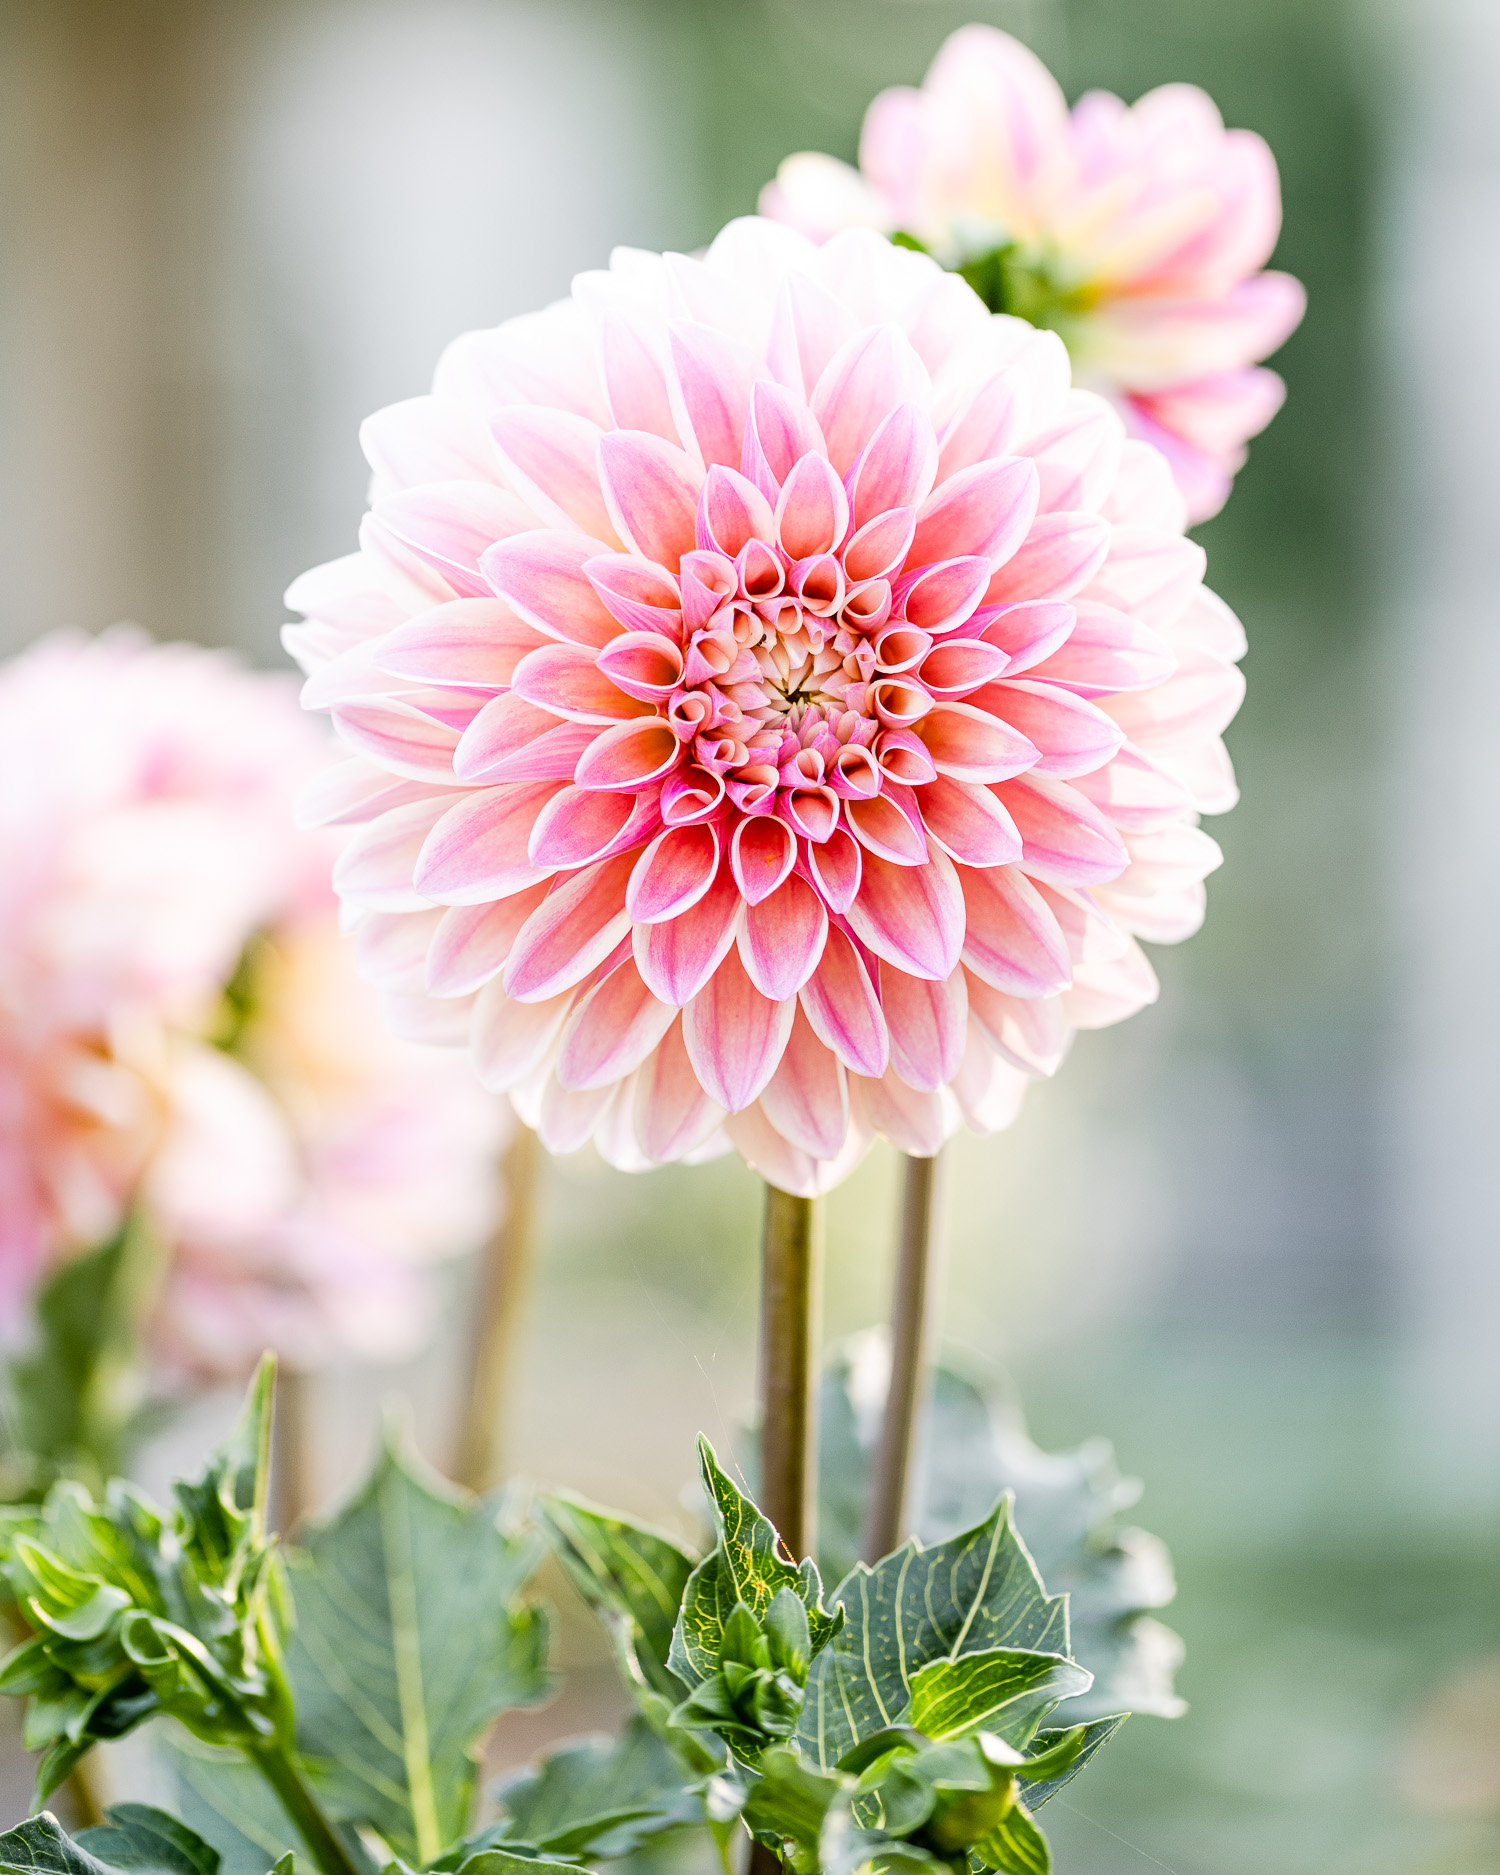 Pink Dahlia blooming in The Flower Garden | Flowers Blooming, Zinnias, Roses, Dahlias